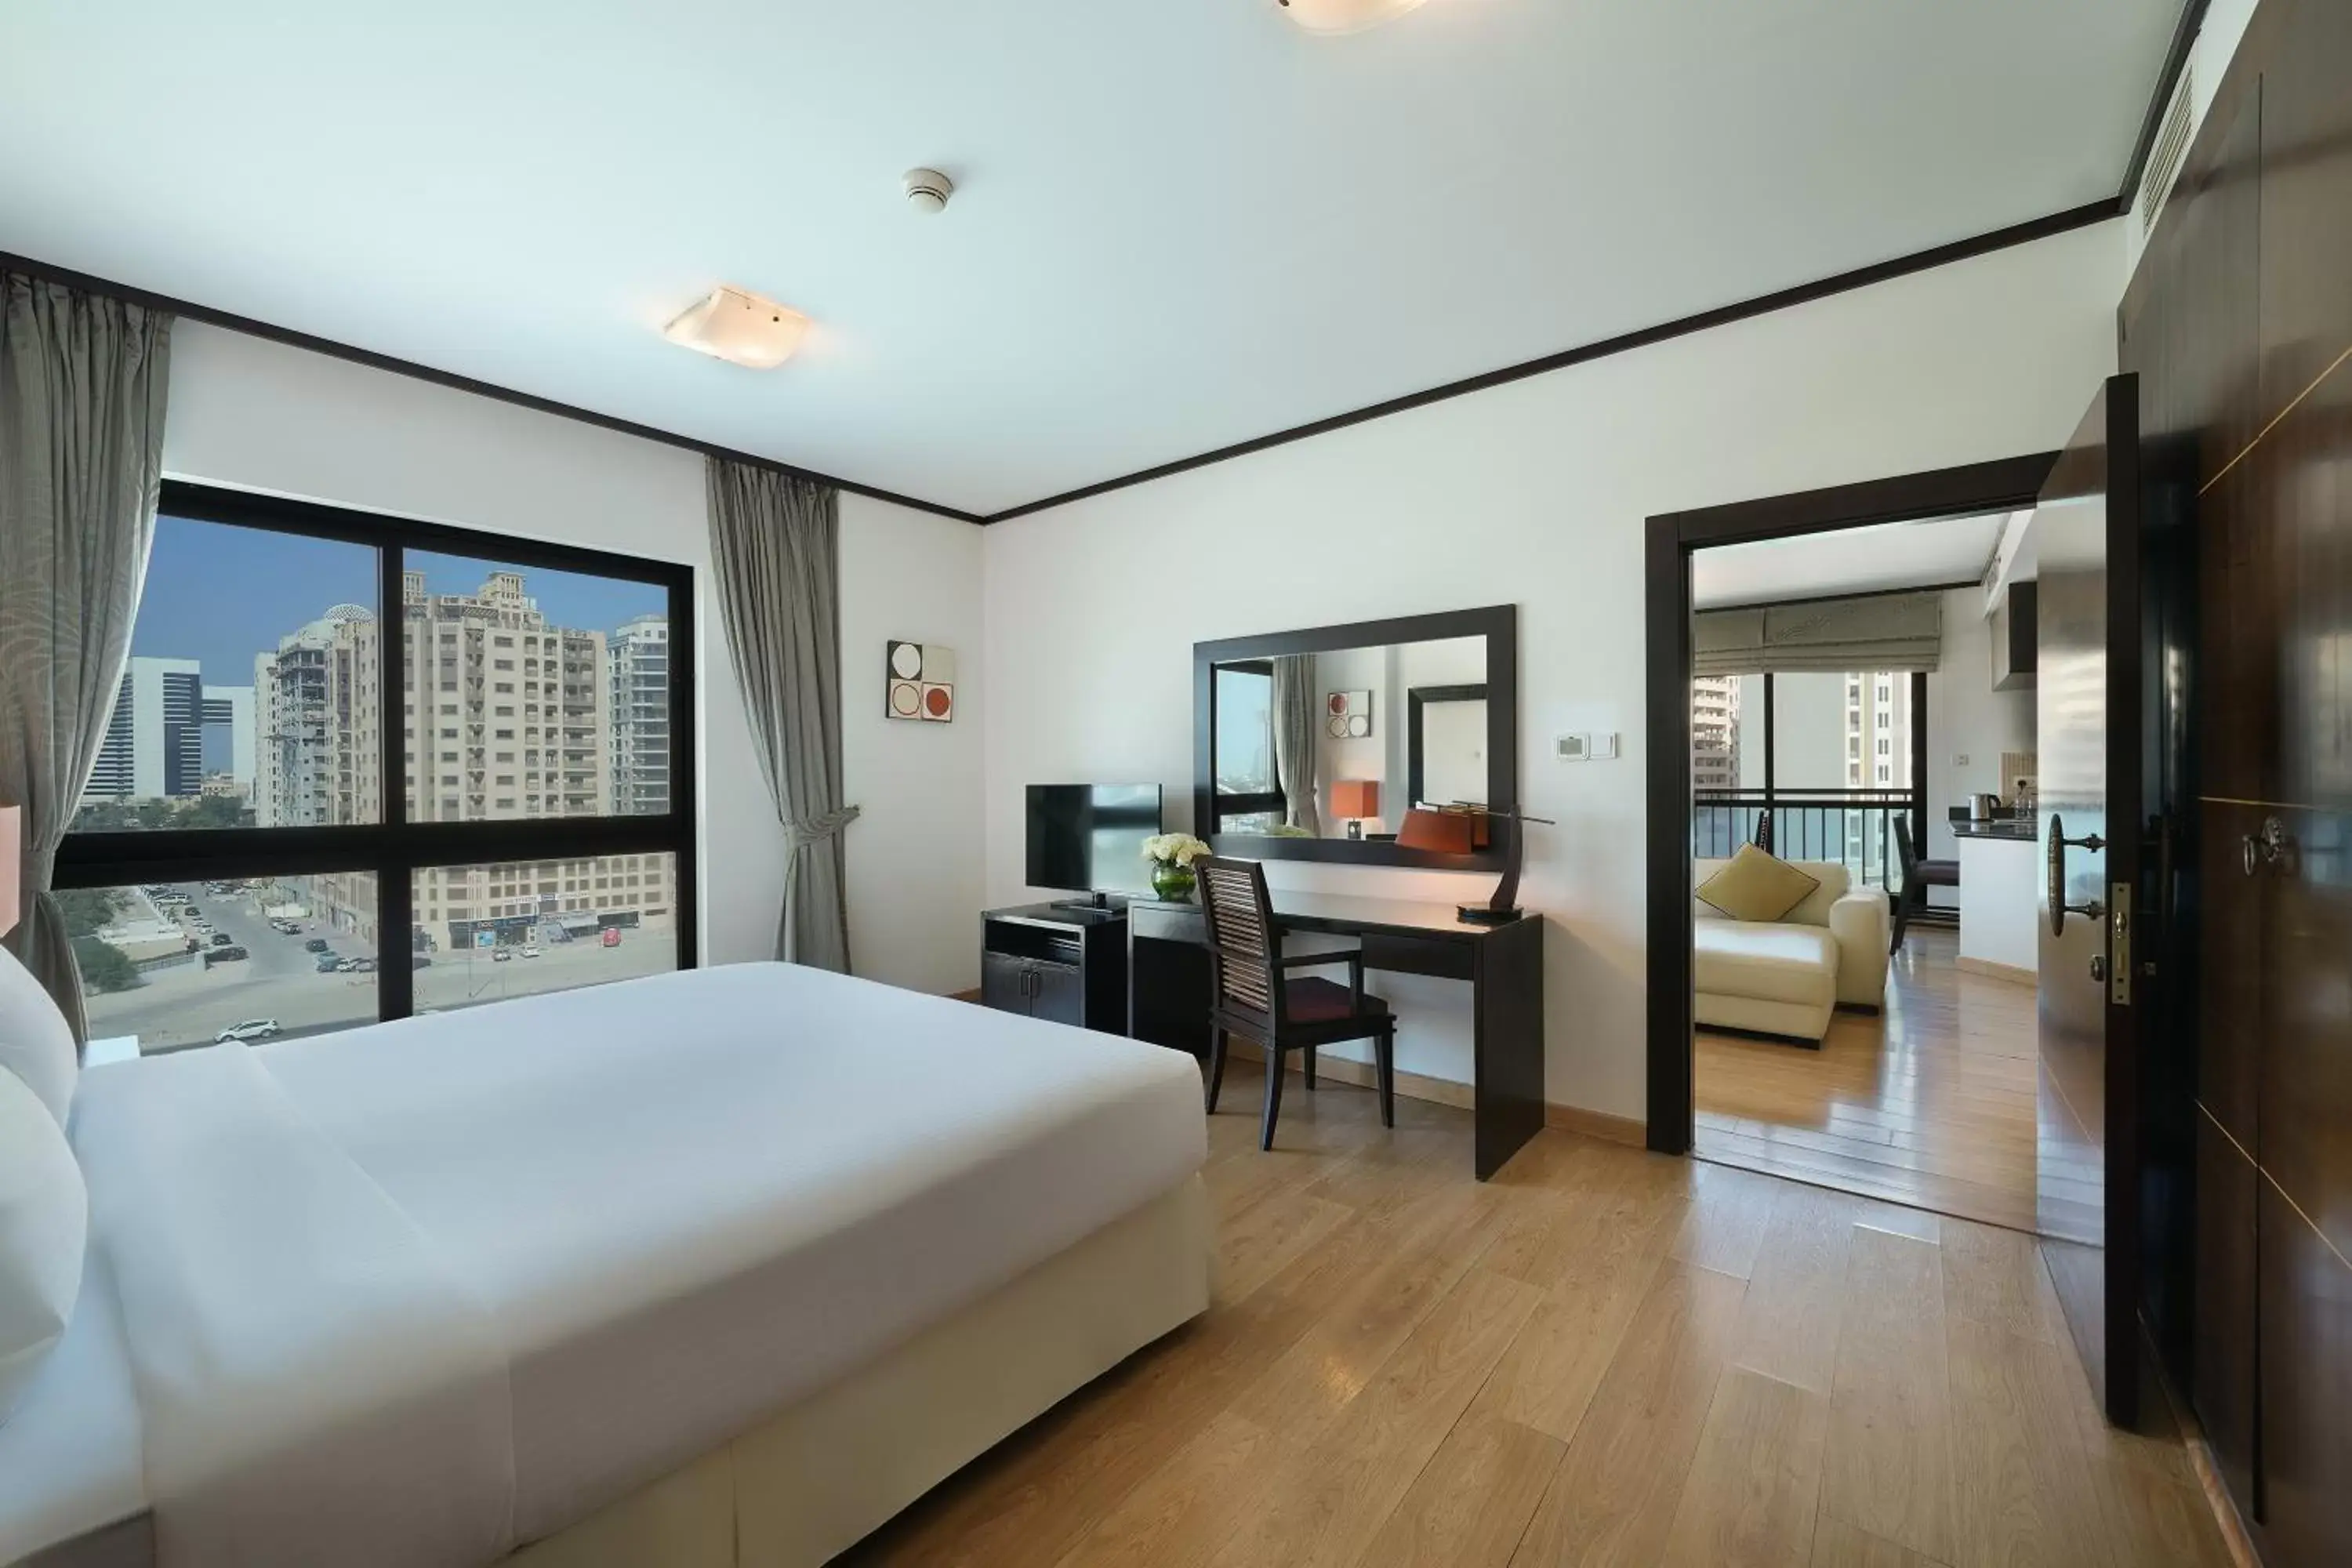 Bed in Park Apartments Dubai, an Edge By Rotana Hotel